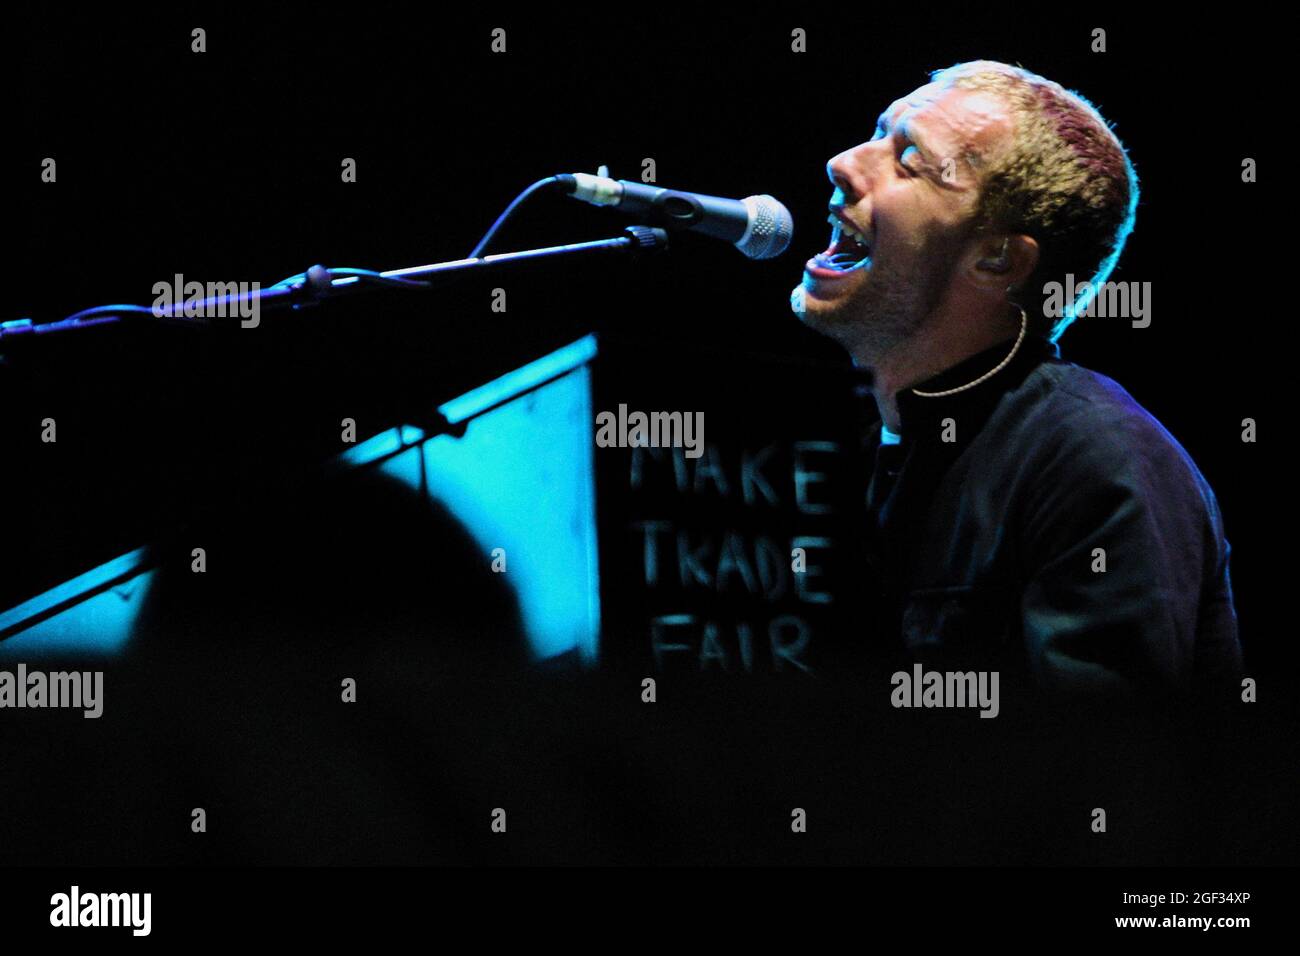 Chris Martin - Coldplay, V2003, Hylands Park, Chelmsford, Essex, Royaume-Uni - 16 août 2003 Banque D'Images